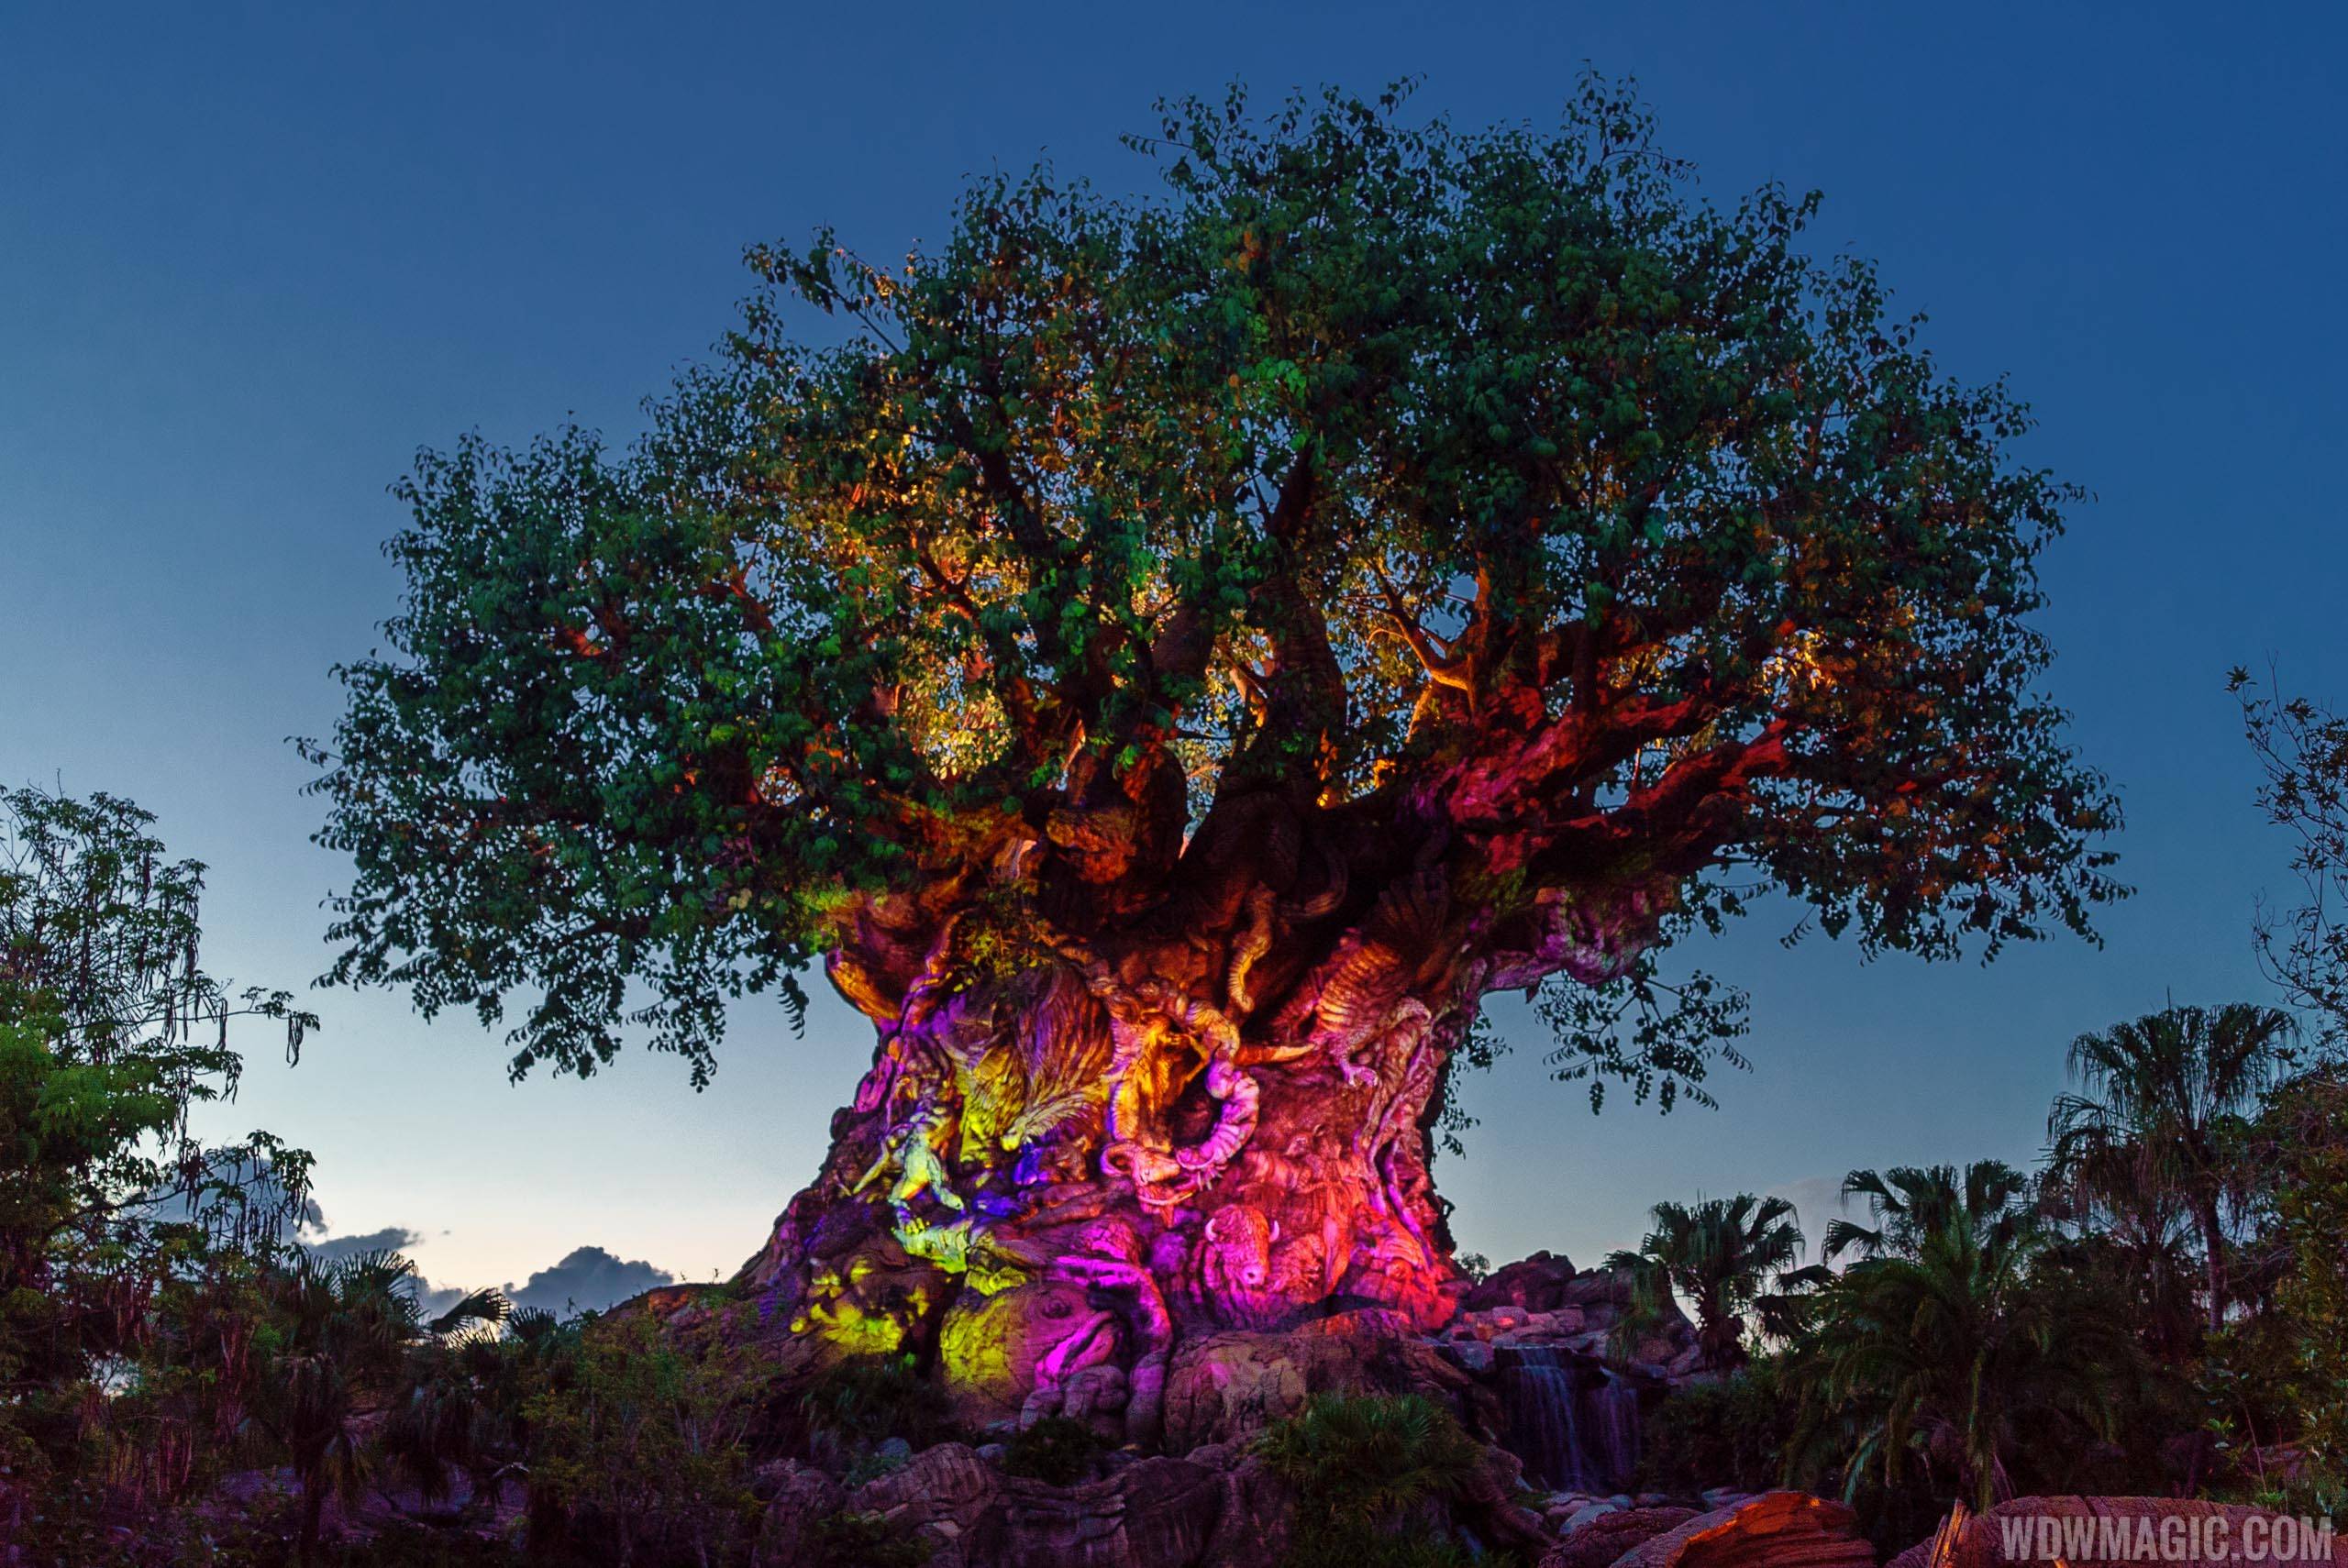 VIDEO - The Tree of Life Awakenings at Disney's Animal Kingdom